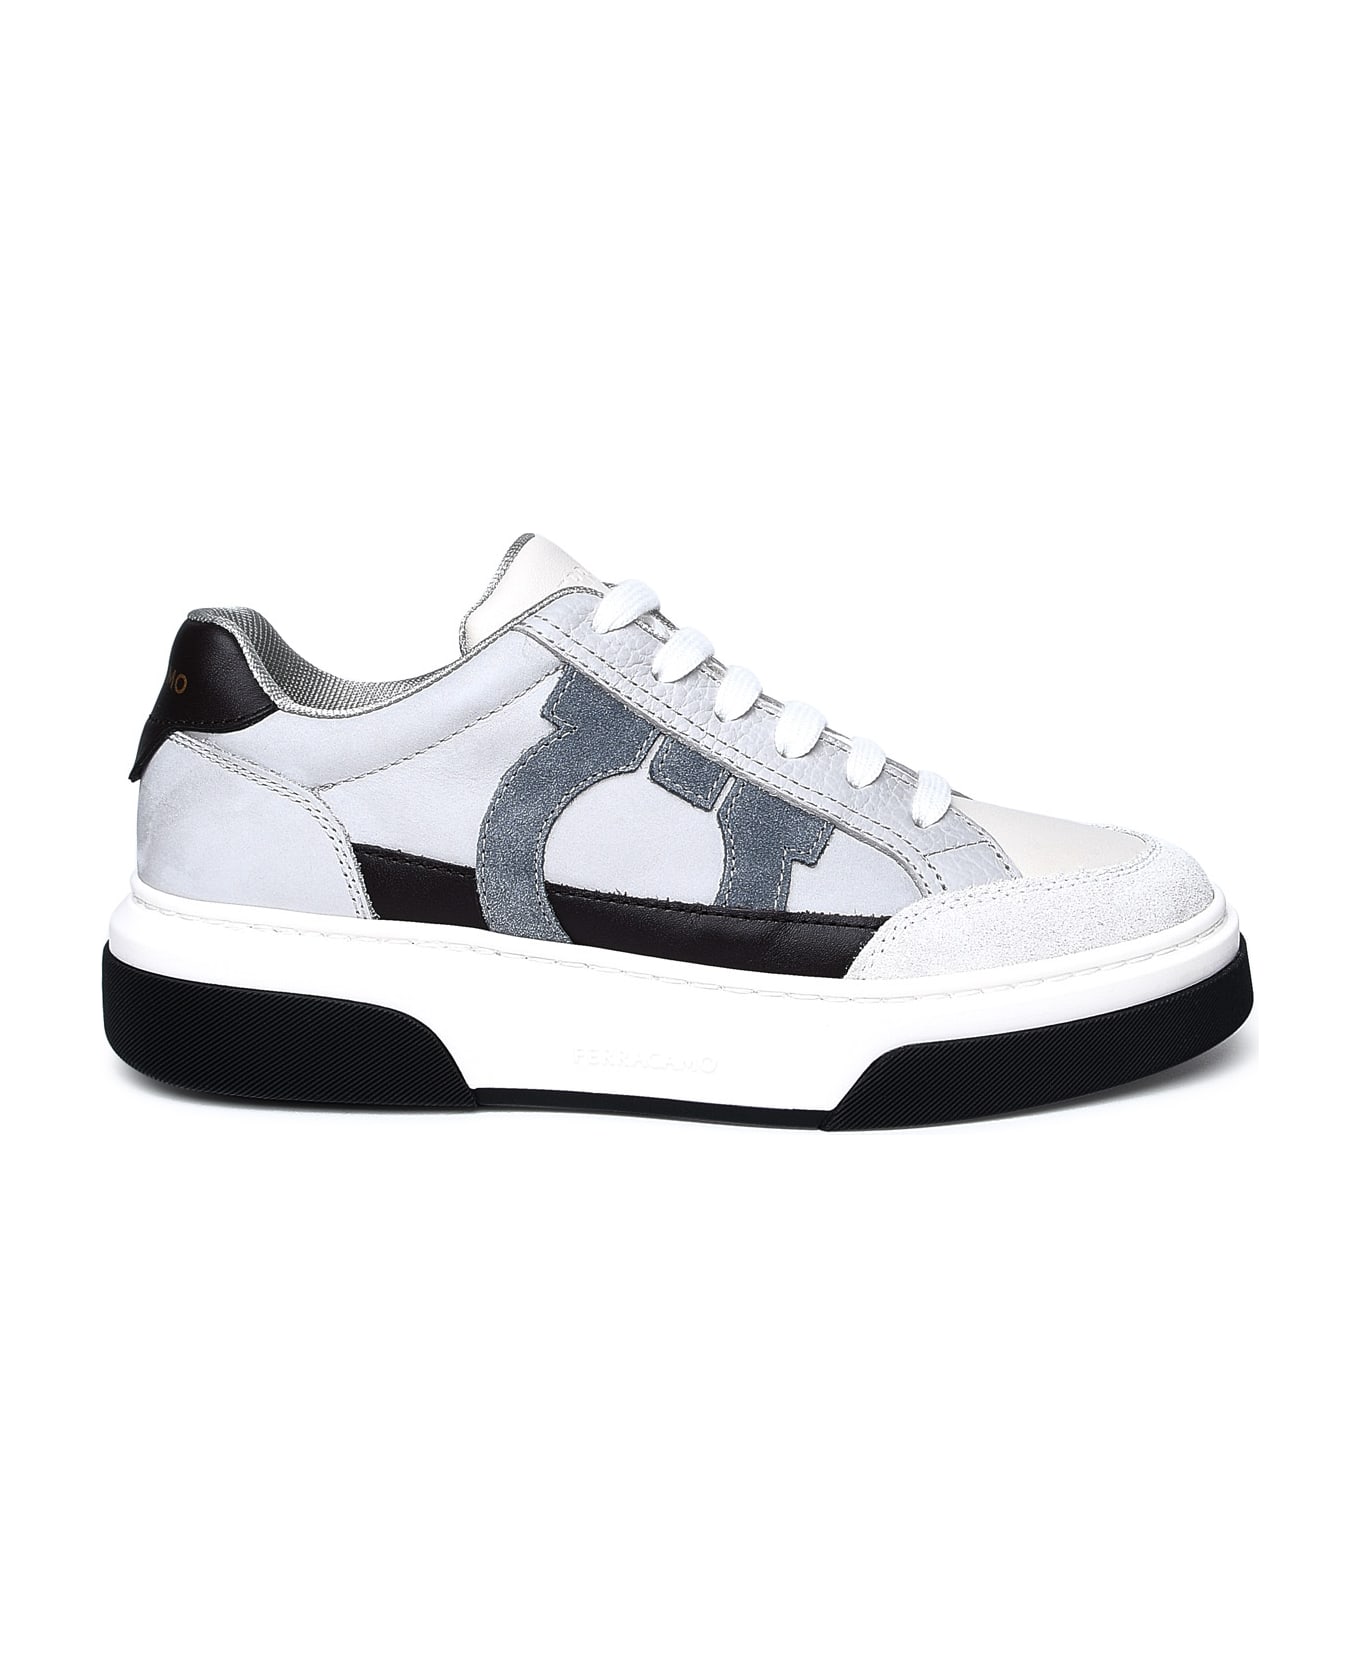 Ferragamo Multicolor Nappa Leather Sneakers - Grey スニーカー